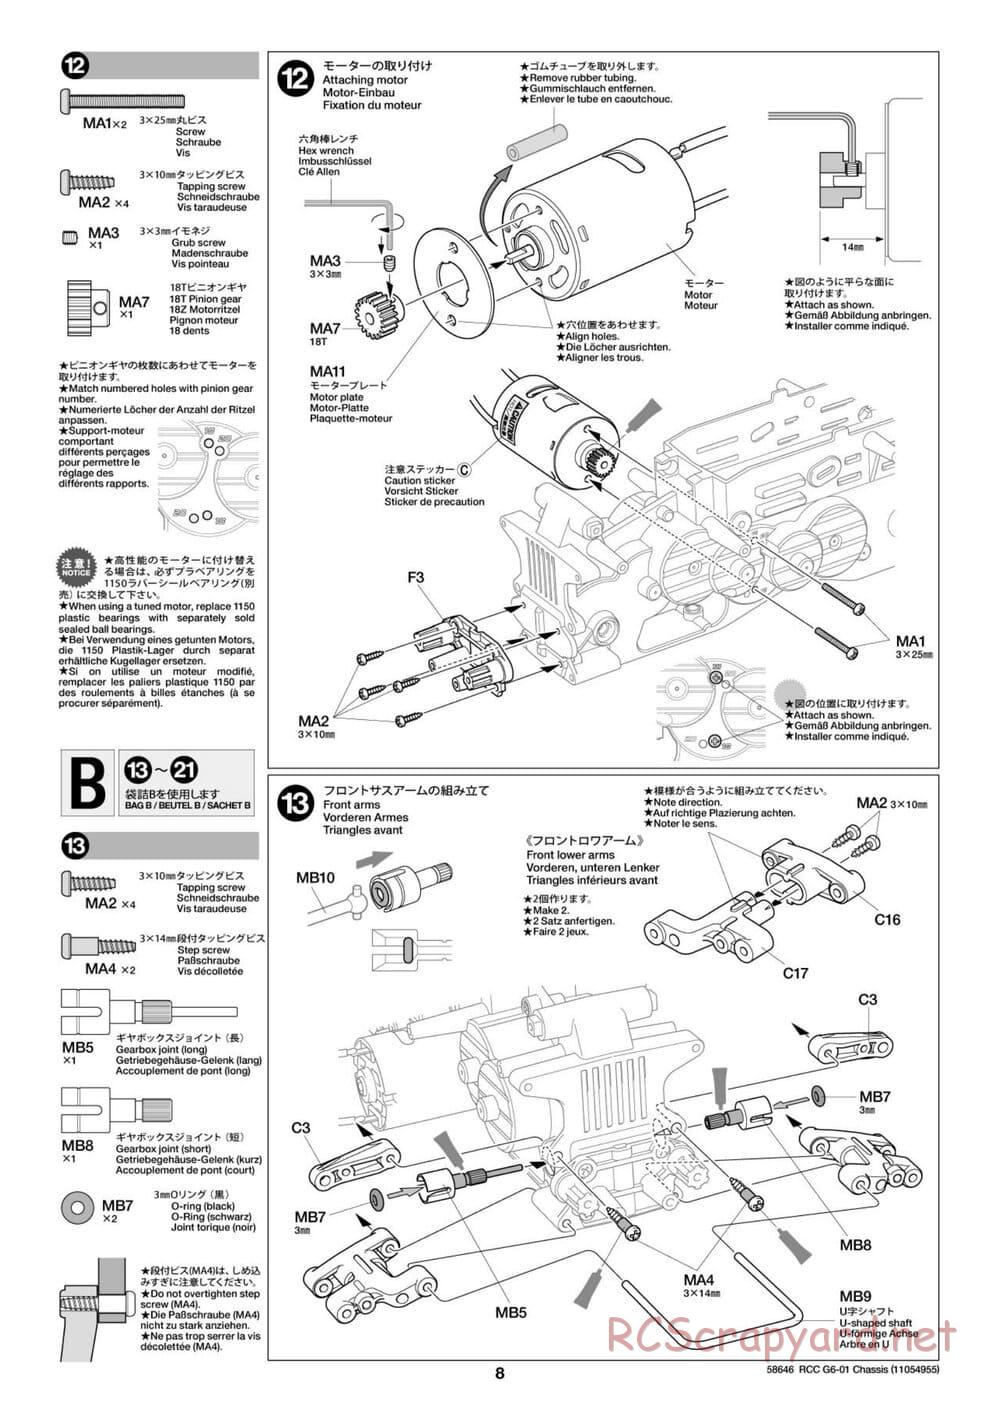 Tamiya - Konghead 6x6 - G6-01 Chassis - Manual - Page 8